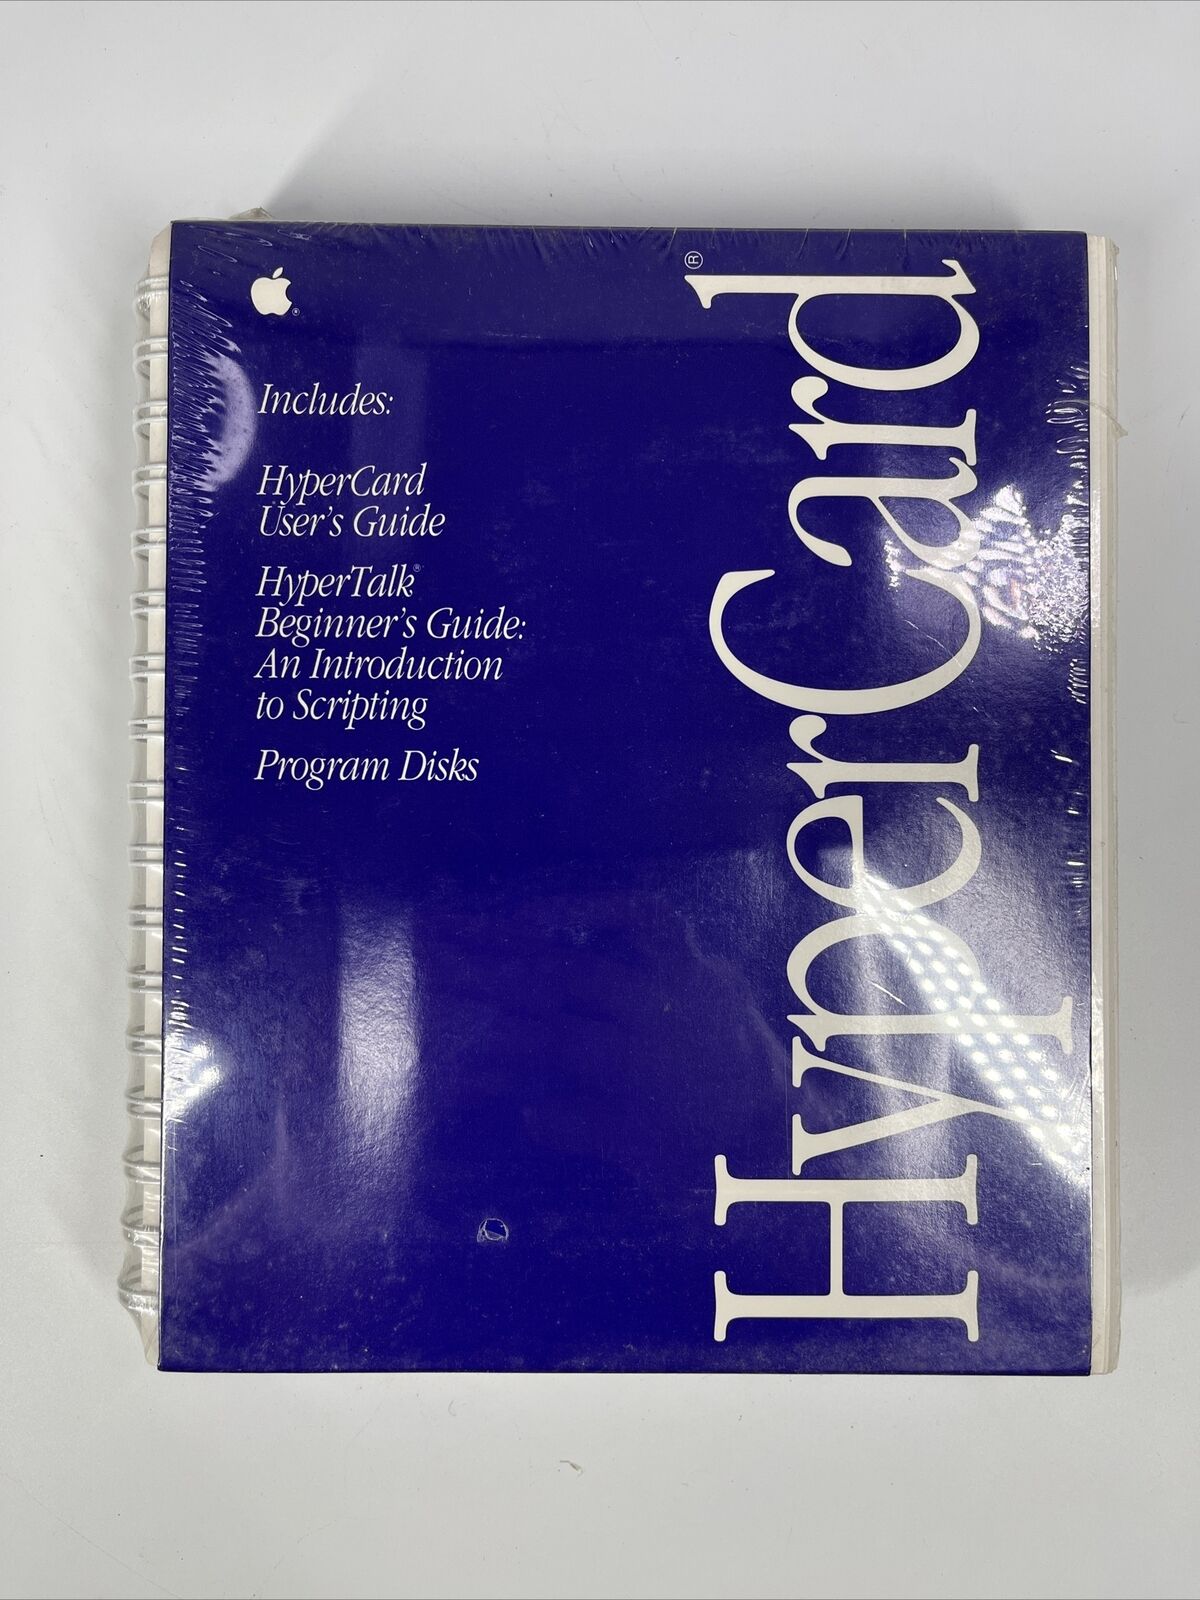 Vintage Apple Macintosh HyperCard - NEW, never opened - 